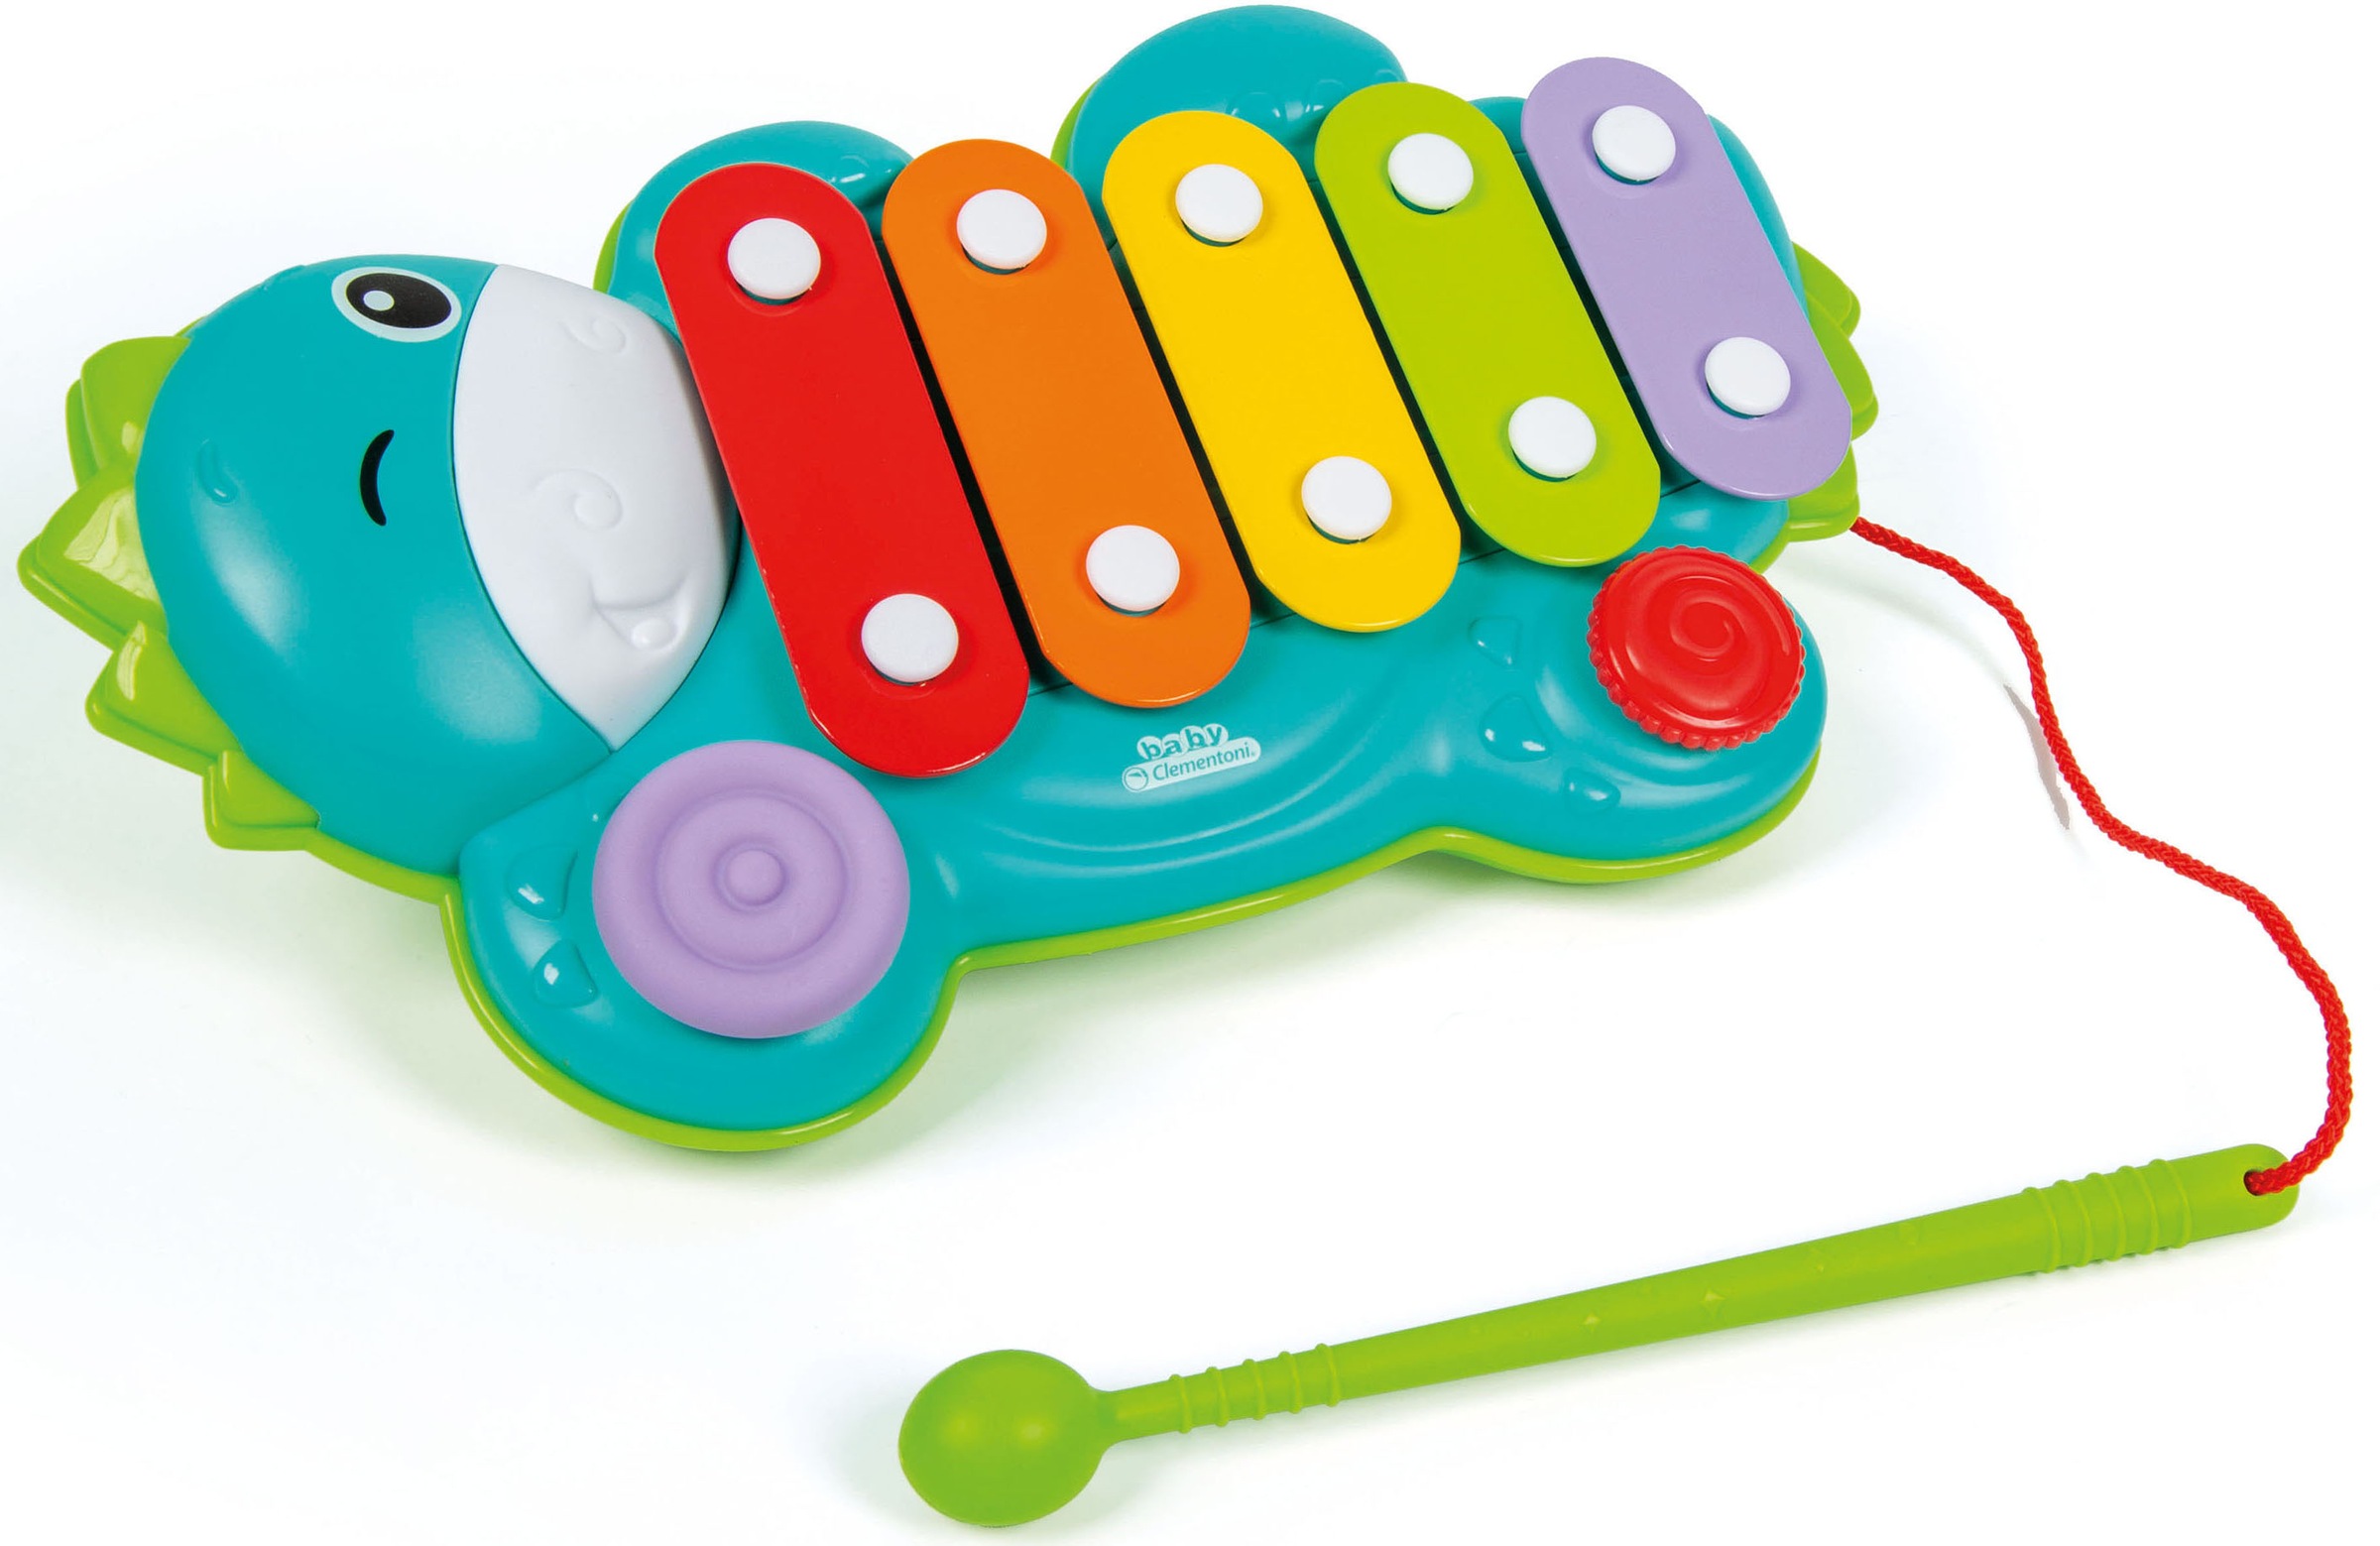 Clementoni® Spielzeug-Musikinstrument »Baby Clementoni, Xylo Dino«